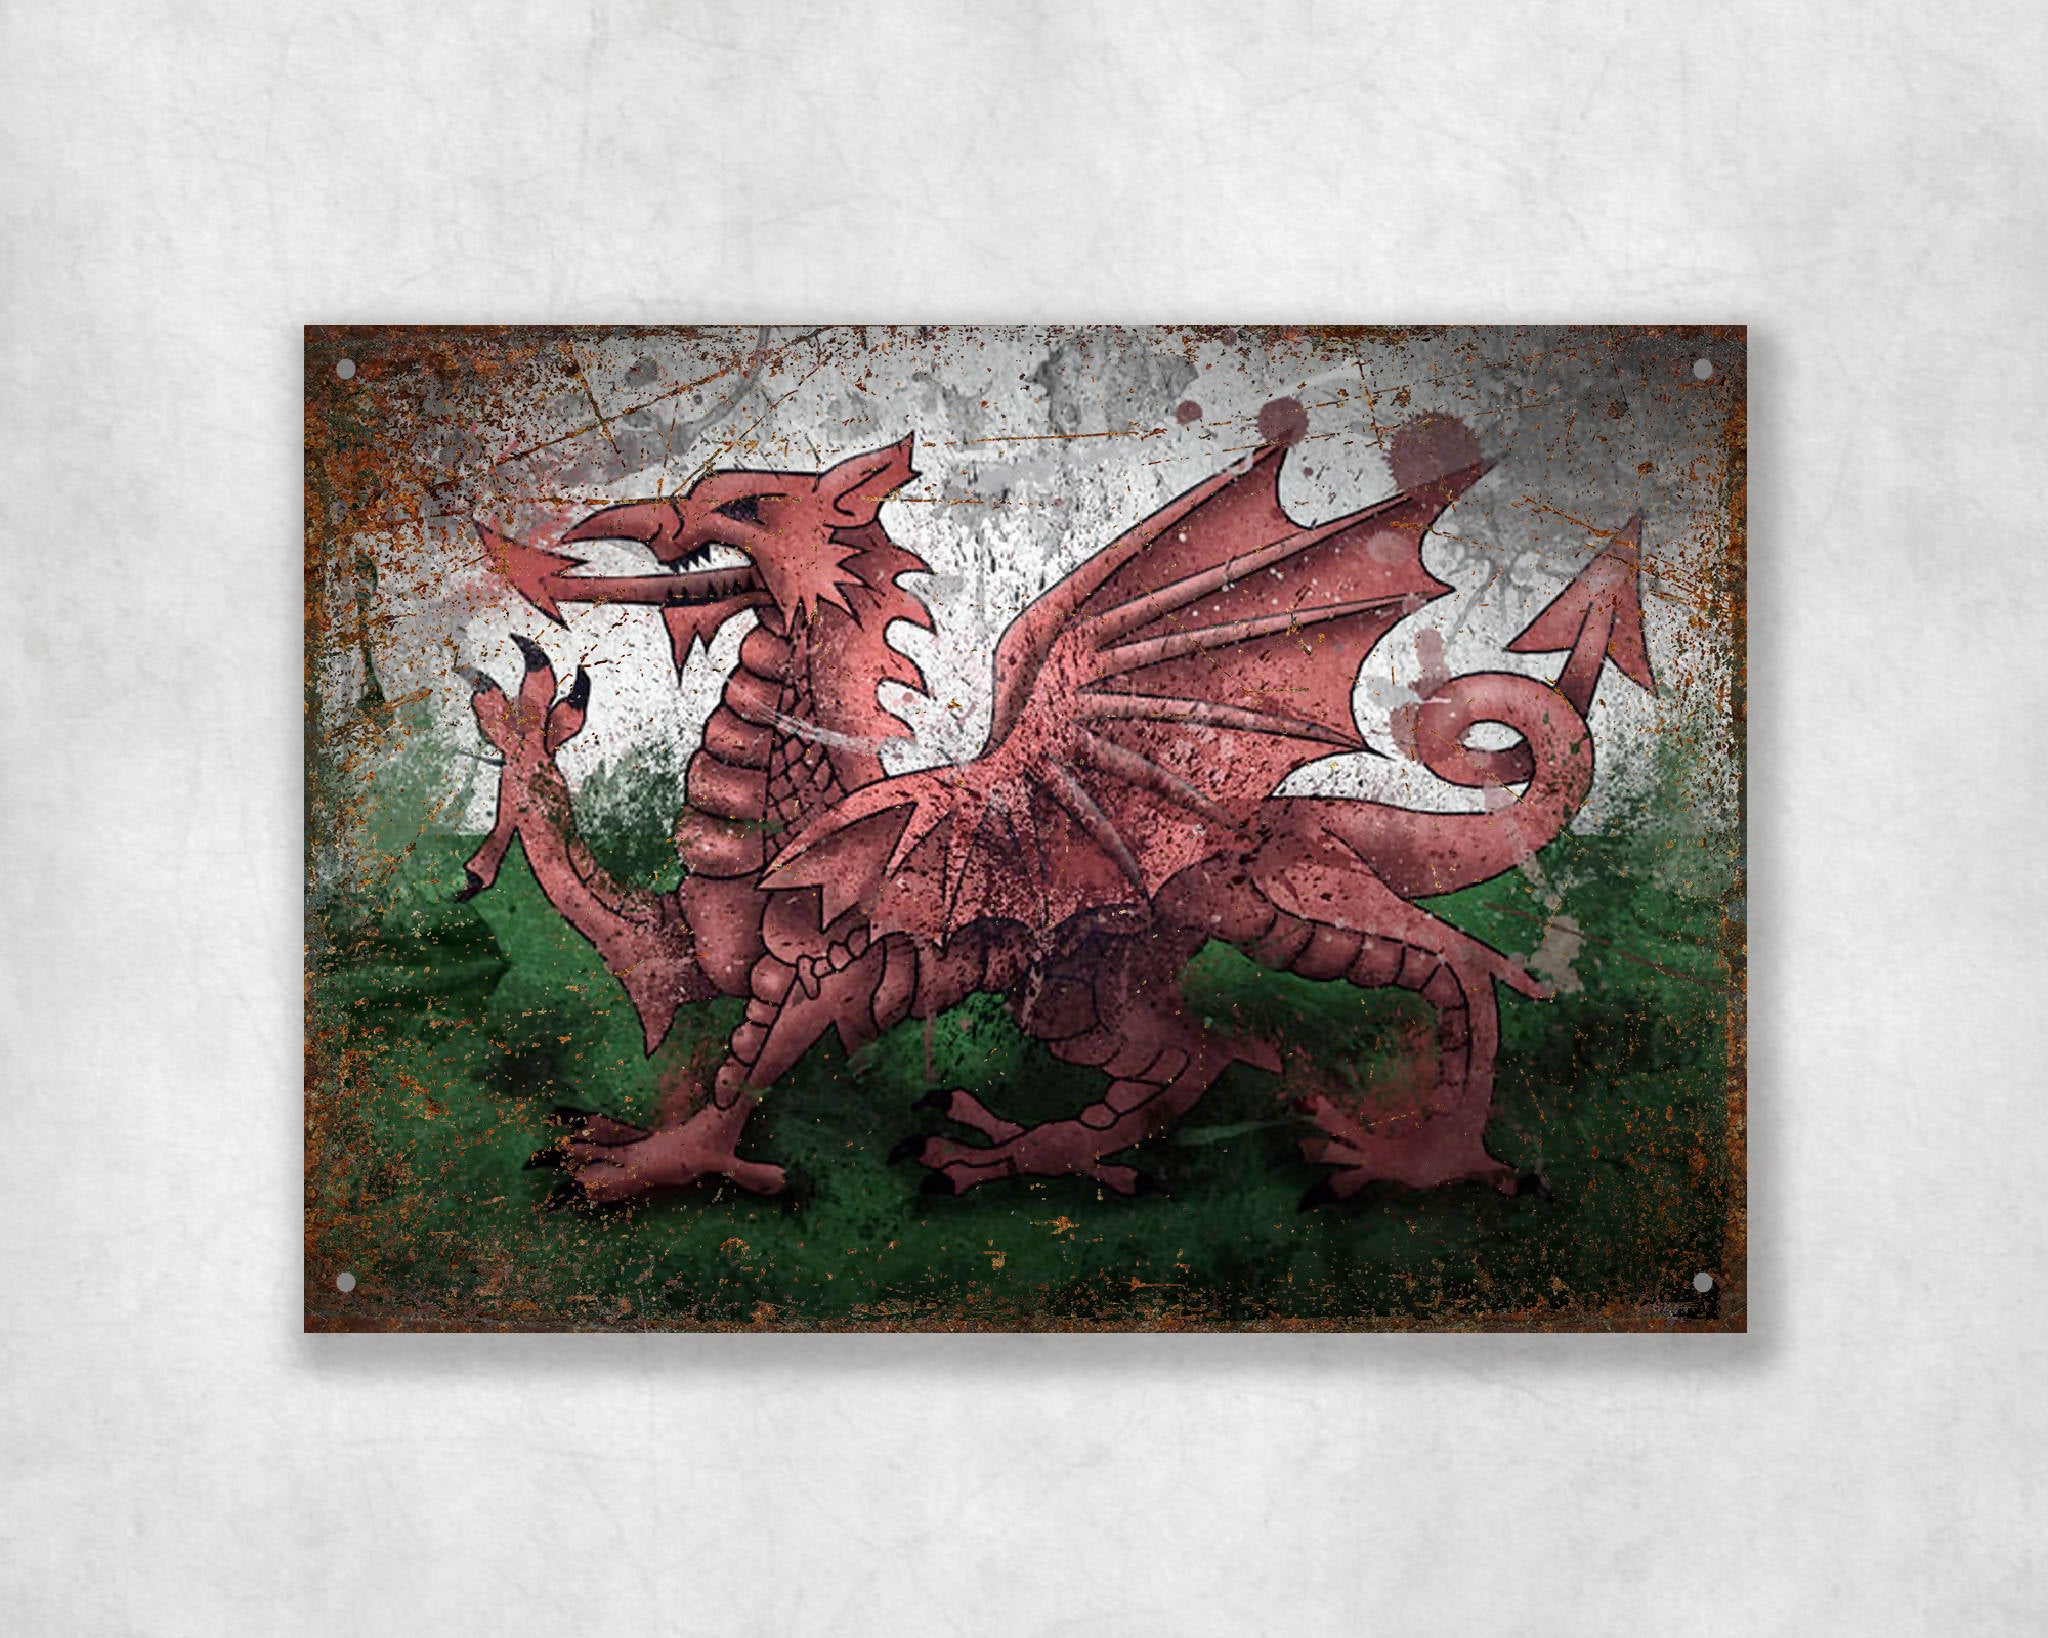 Wales flag aluminium printed metal street sign - gift, keepsake, football gift, rugby gift